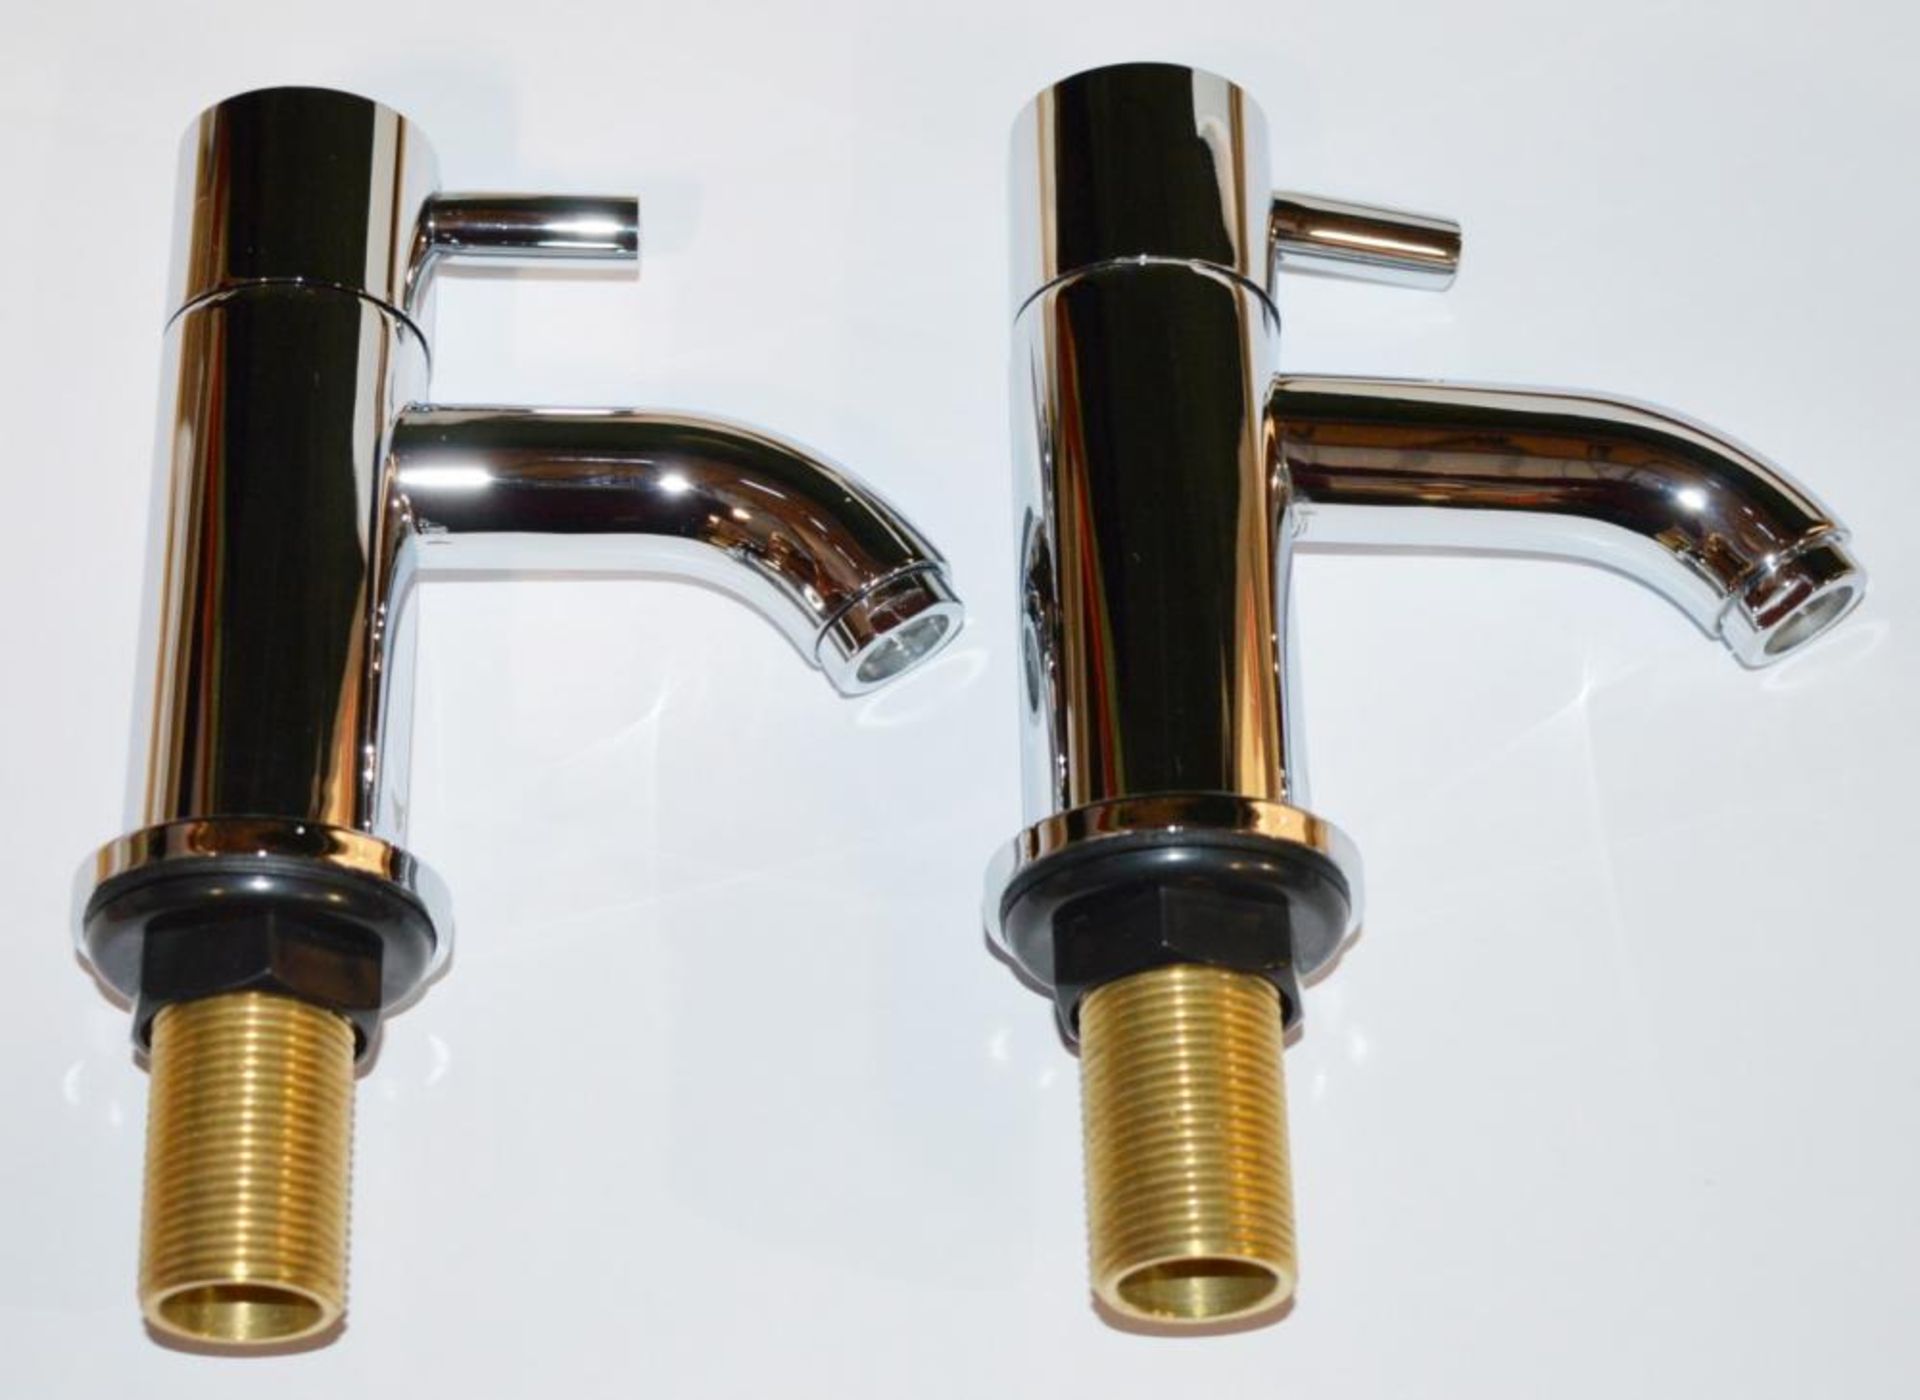 1 x Vogue Series 5 Bath Taps in Chrome - Modern Bath Mixer Tap in Bright Chrome - High Quality Brass